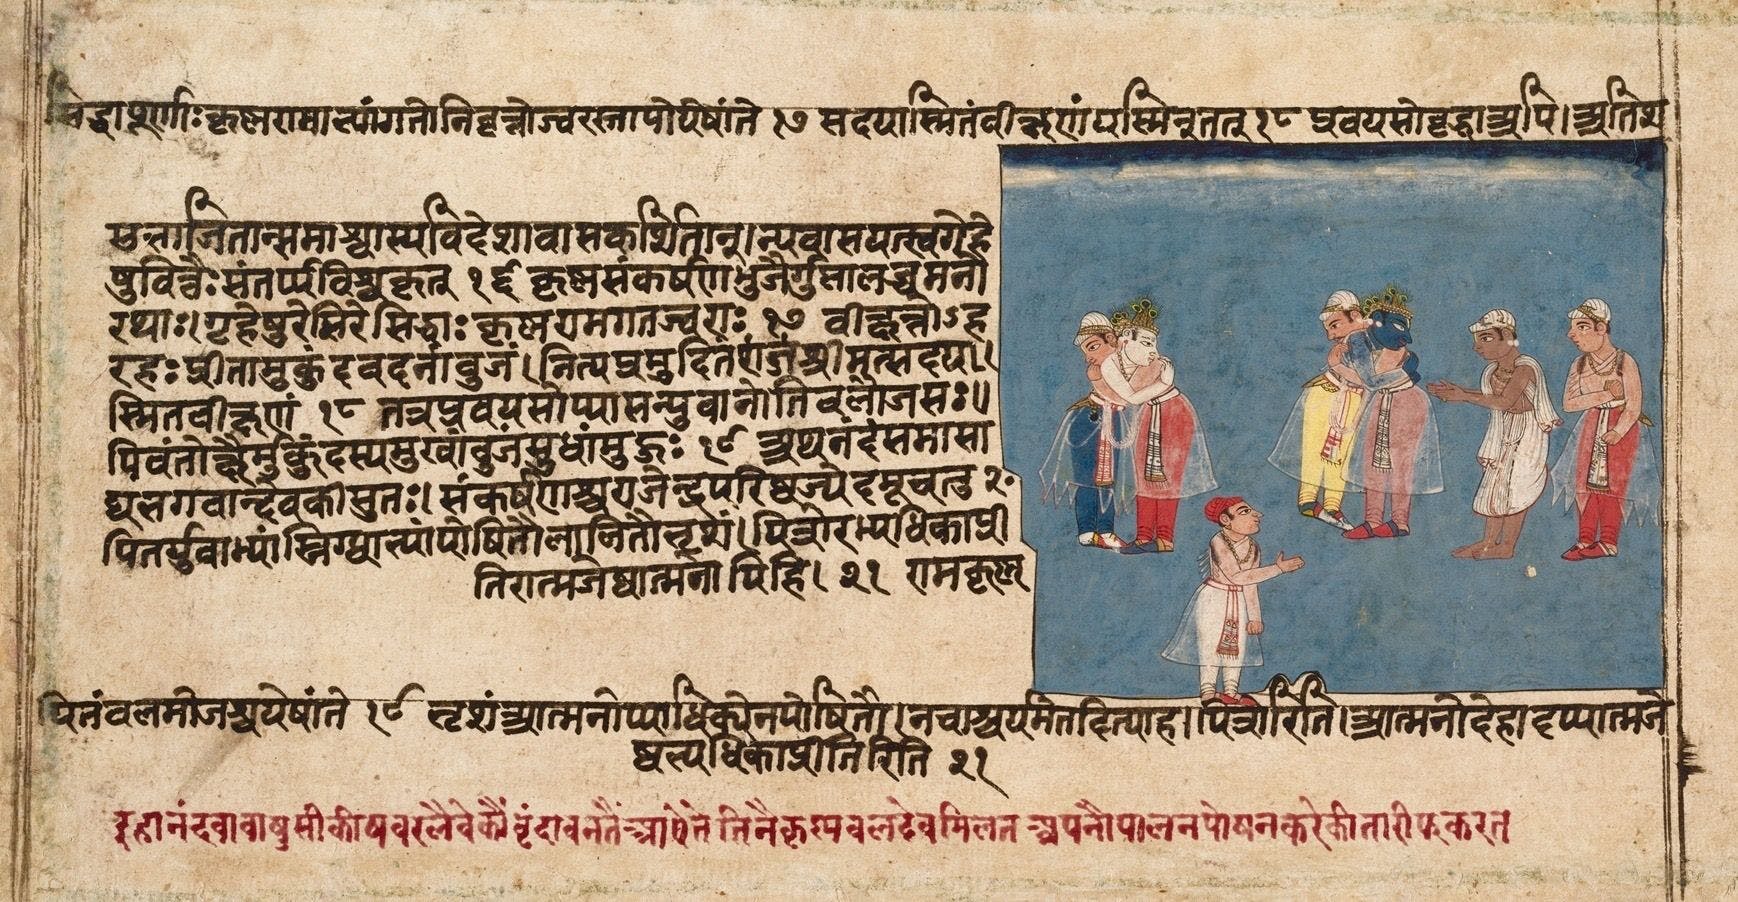 A Bhagavata Purana manuscript in Sanskrit